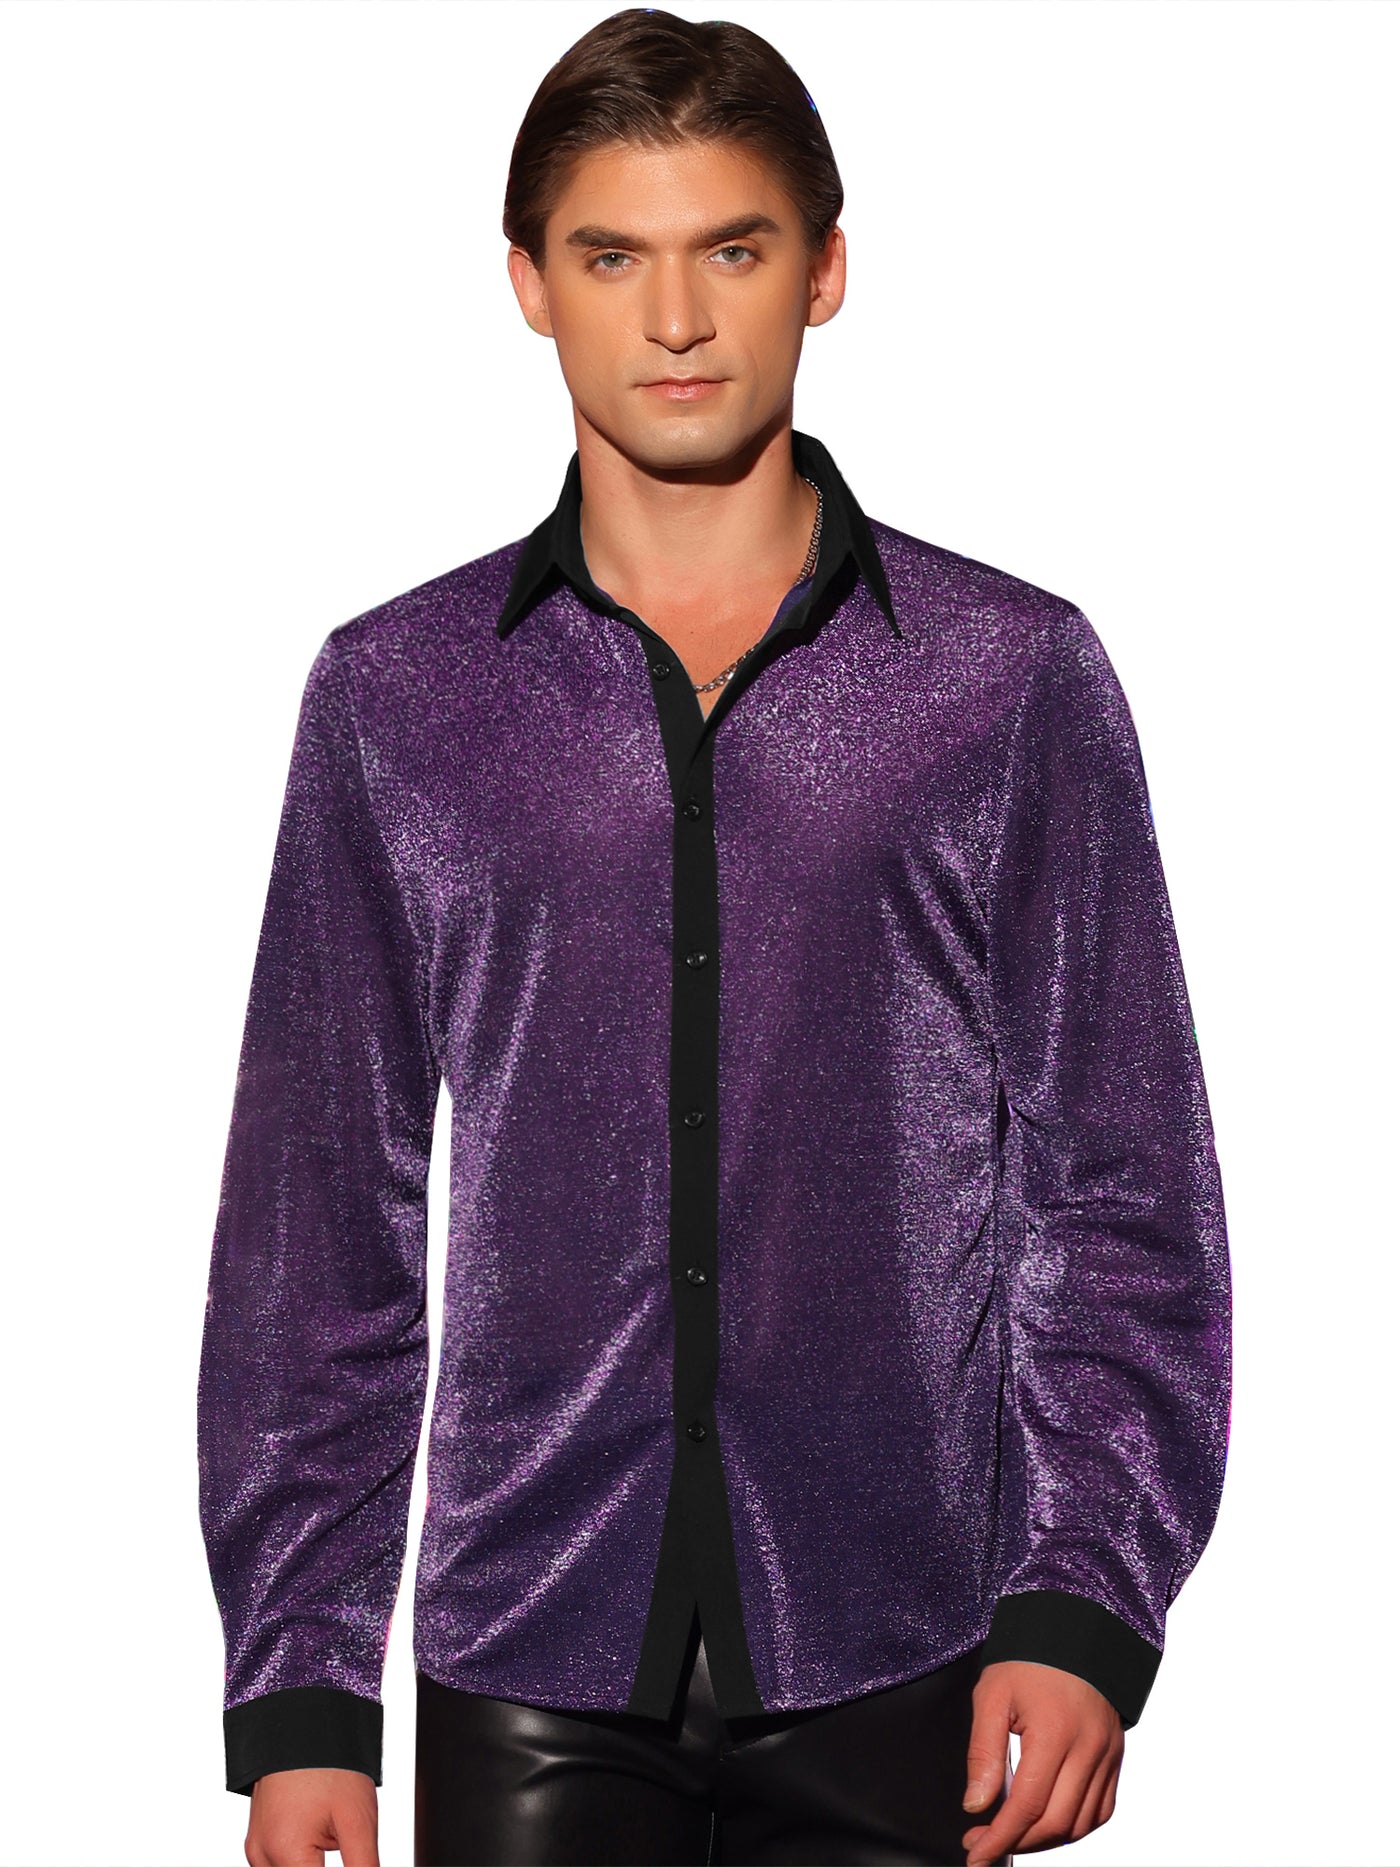 Bublédon Sparkle Dress Shirts for Men's Long Sleeves Party Shining Texture Shirt